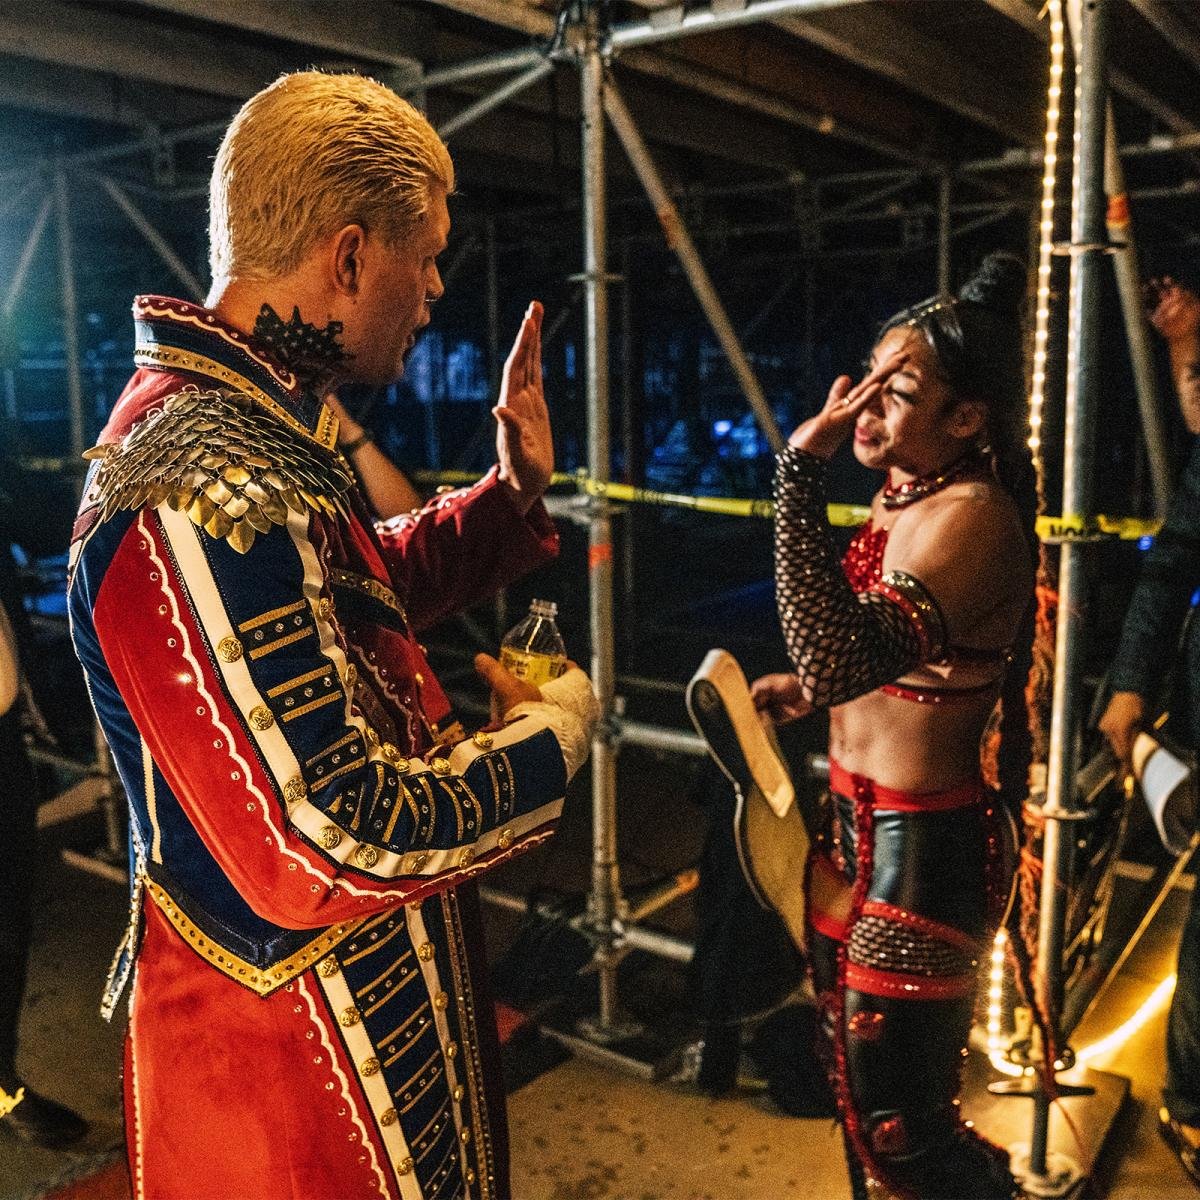 Cody Rhodes greeting Bianca Belair (new Raw Champion) before entering WrestleMania 38